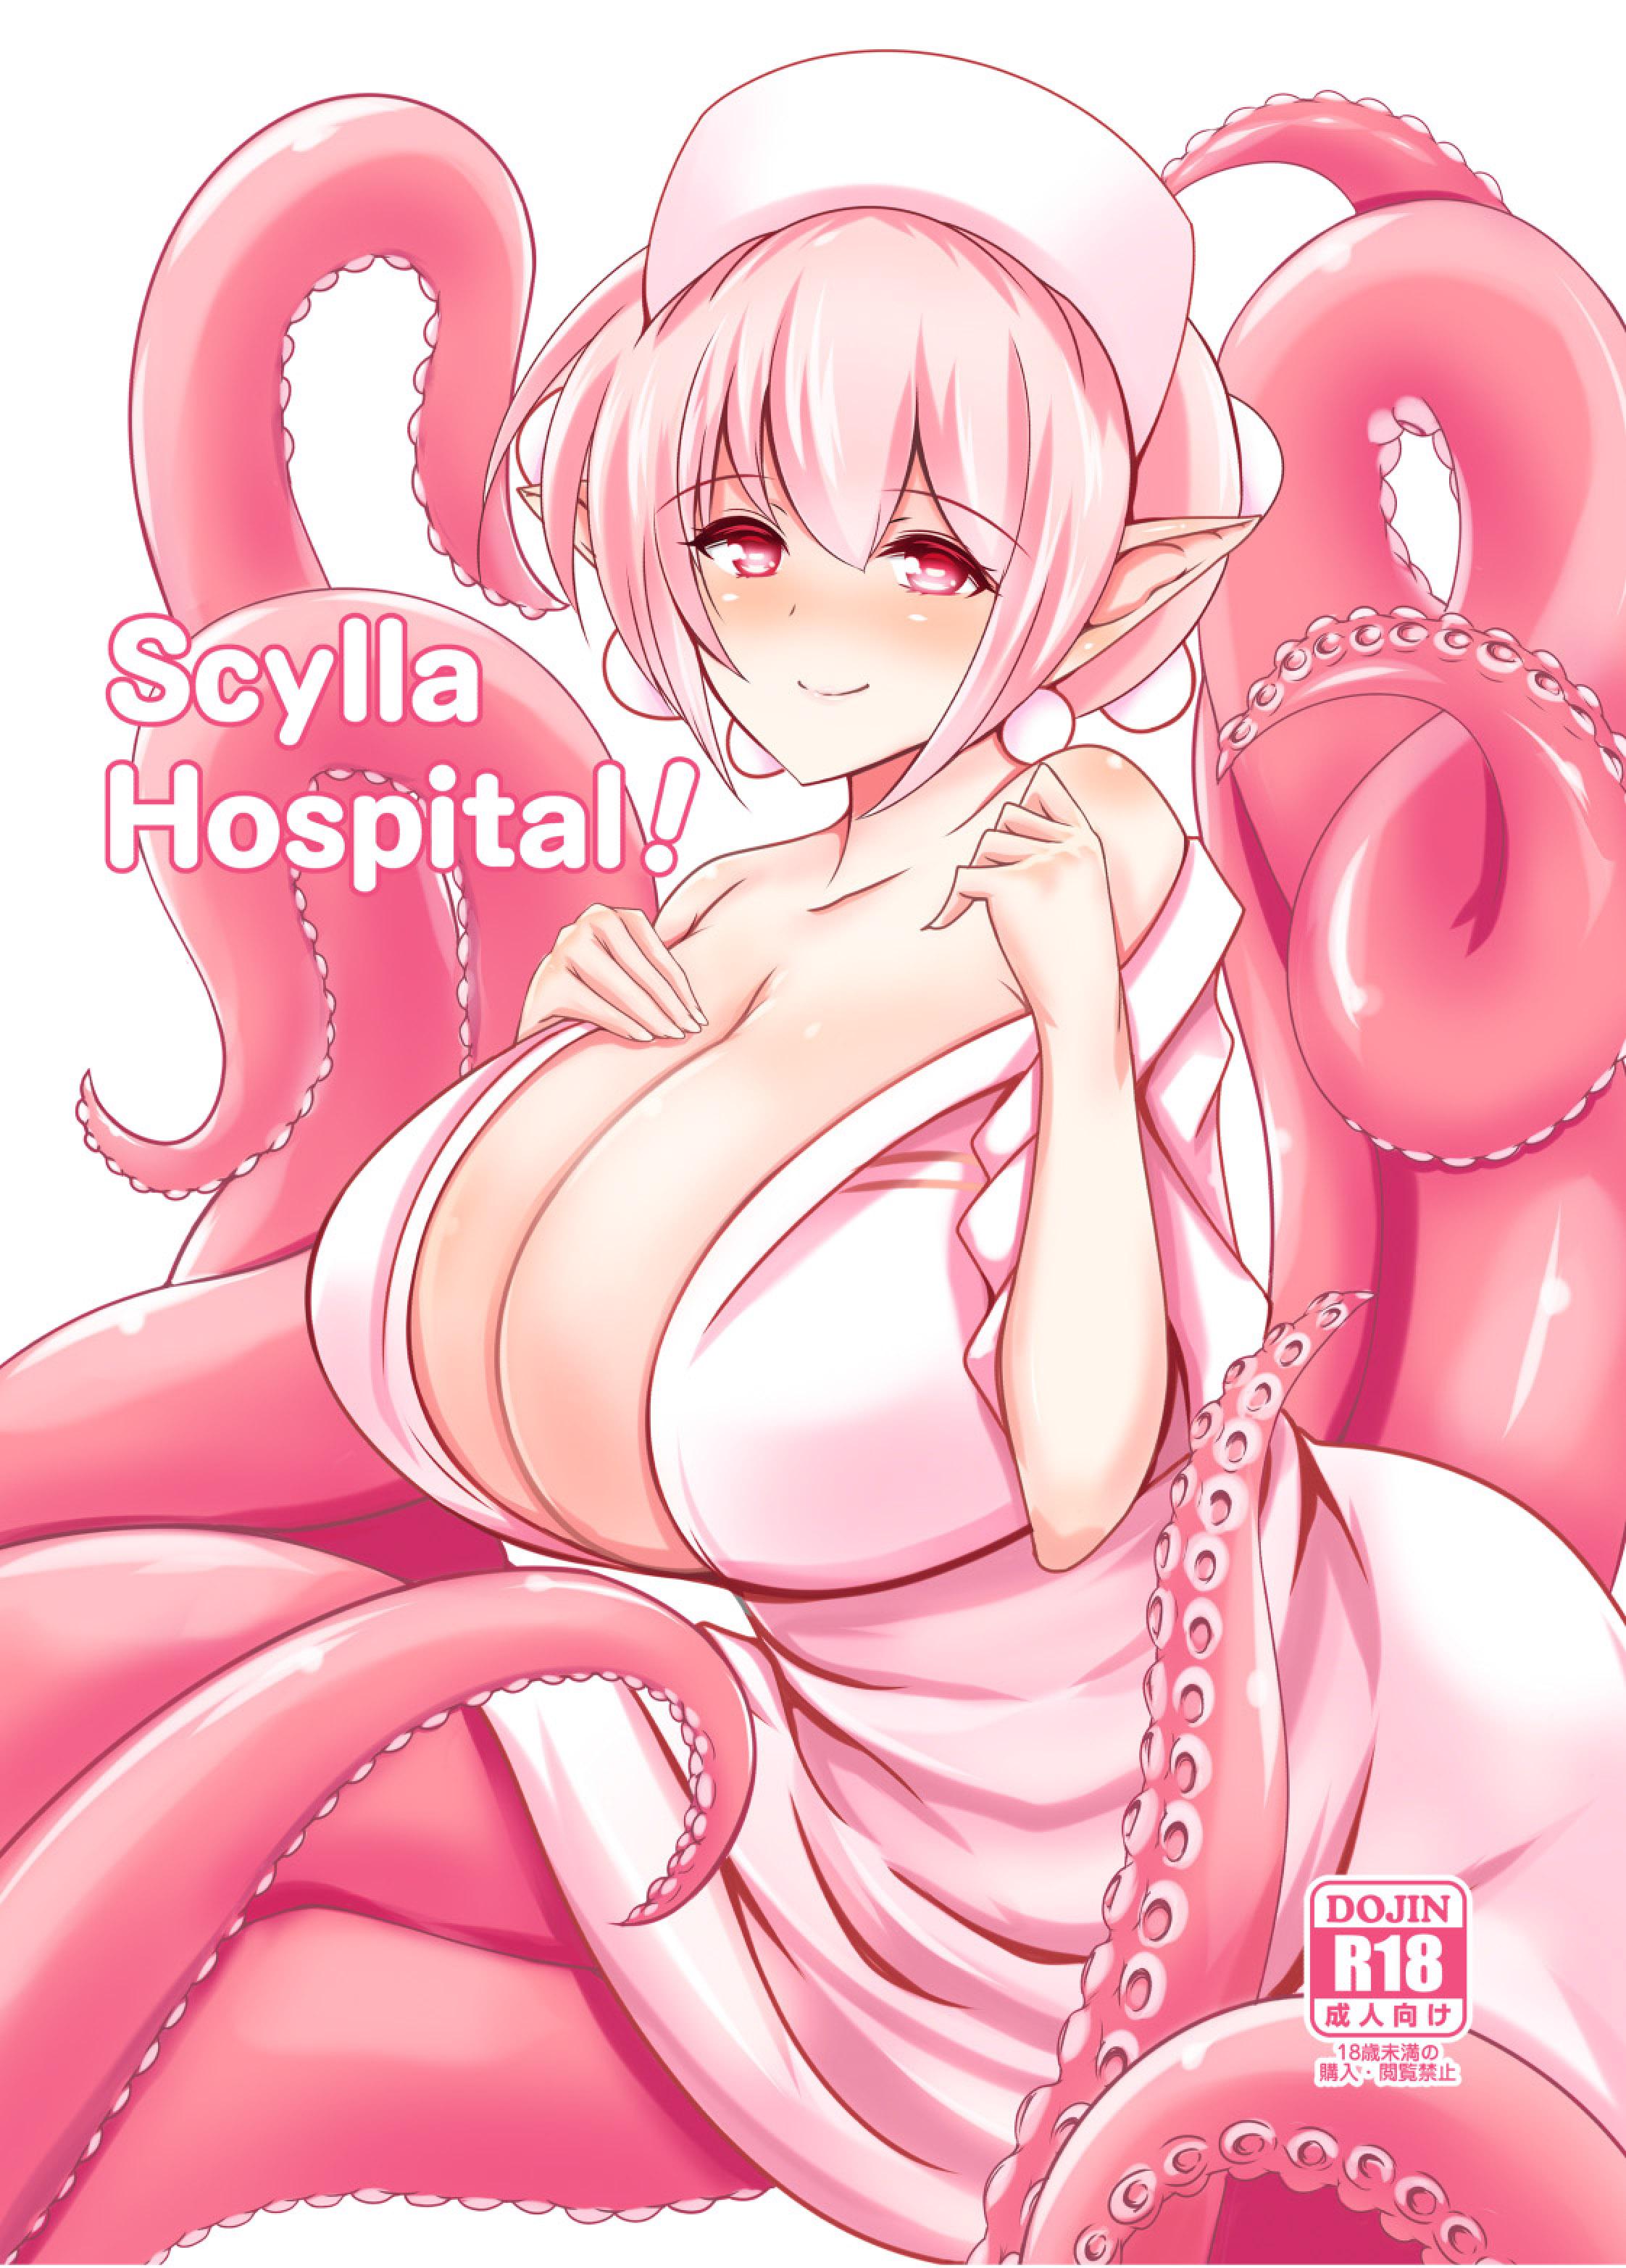 Scylla Hospital! 0